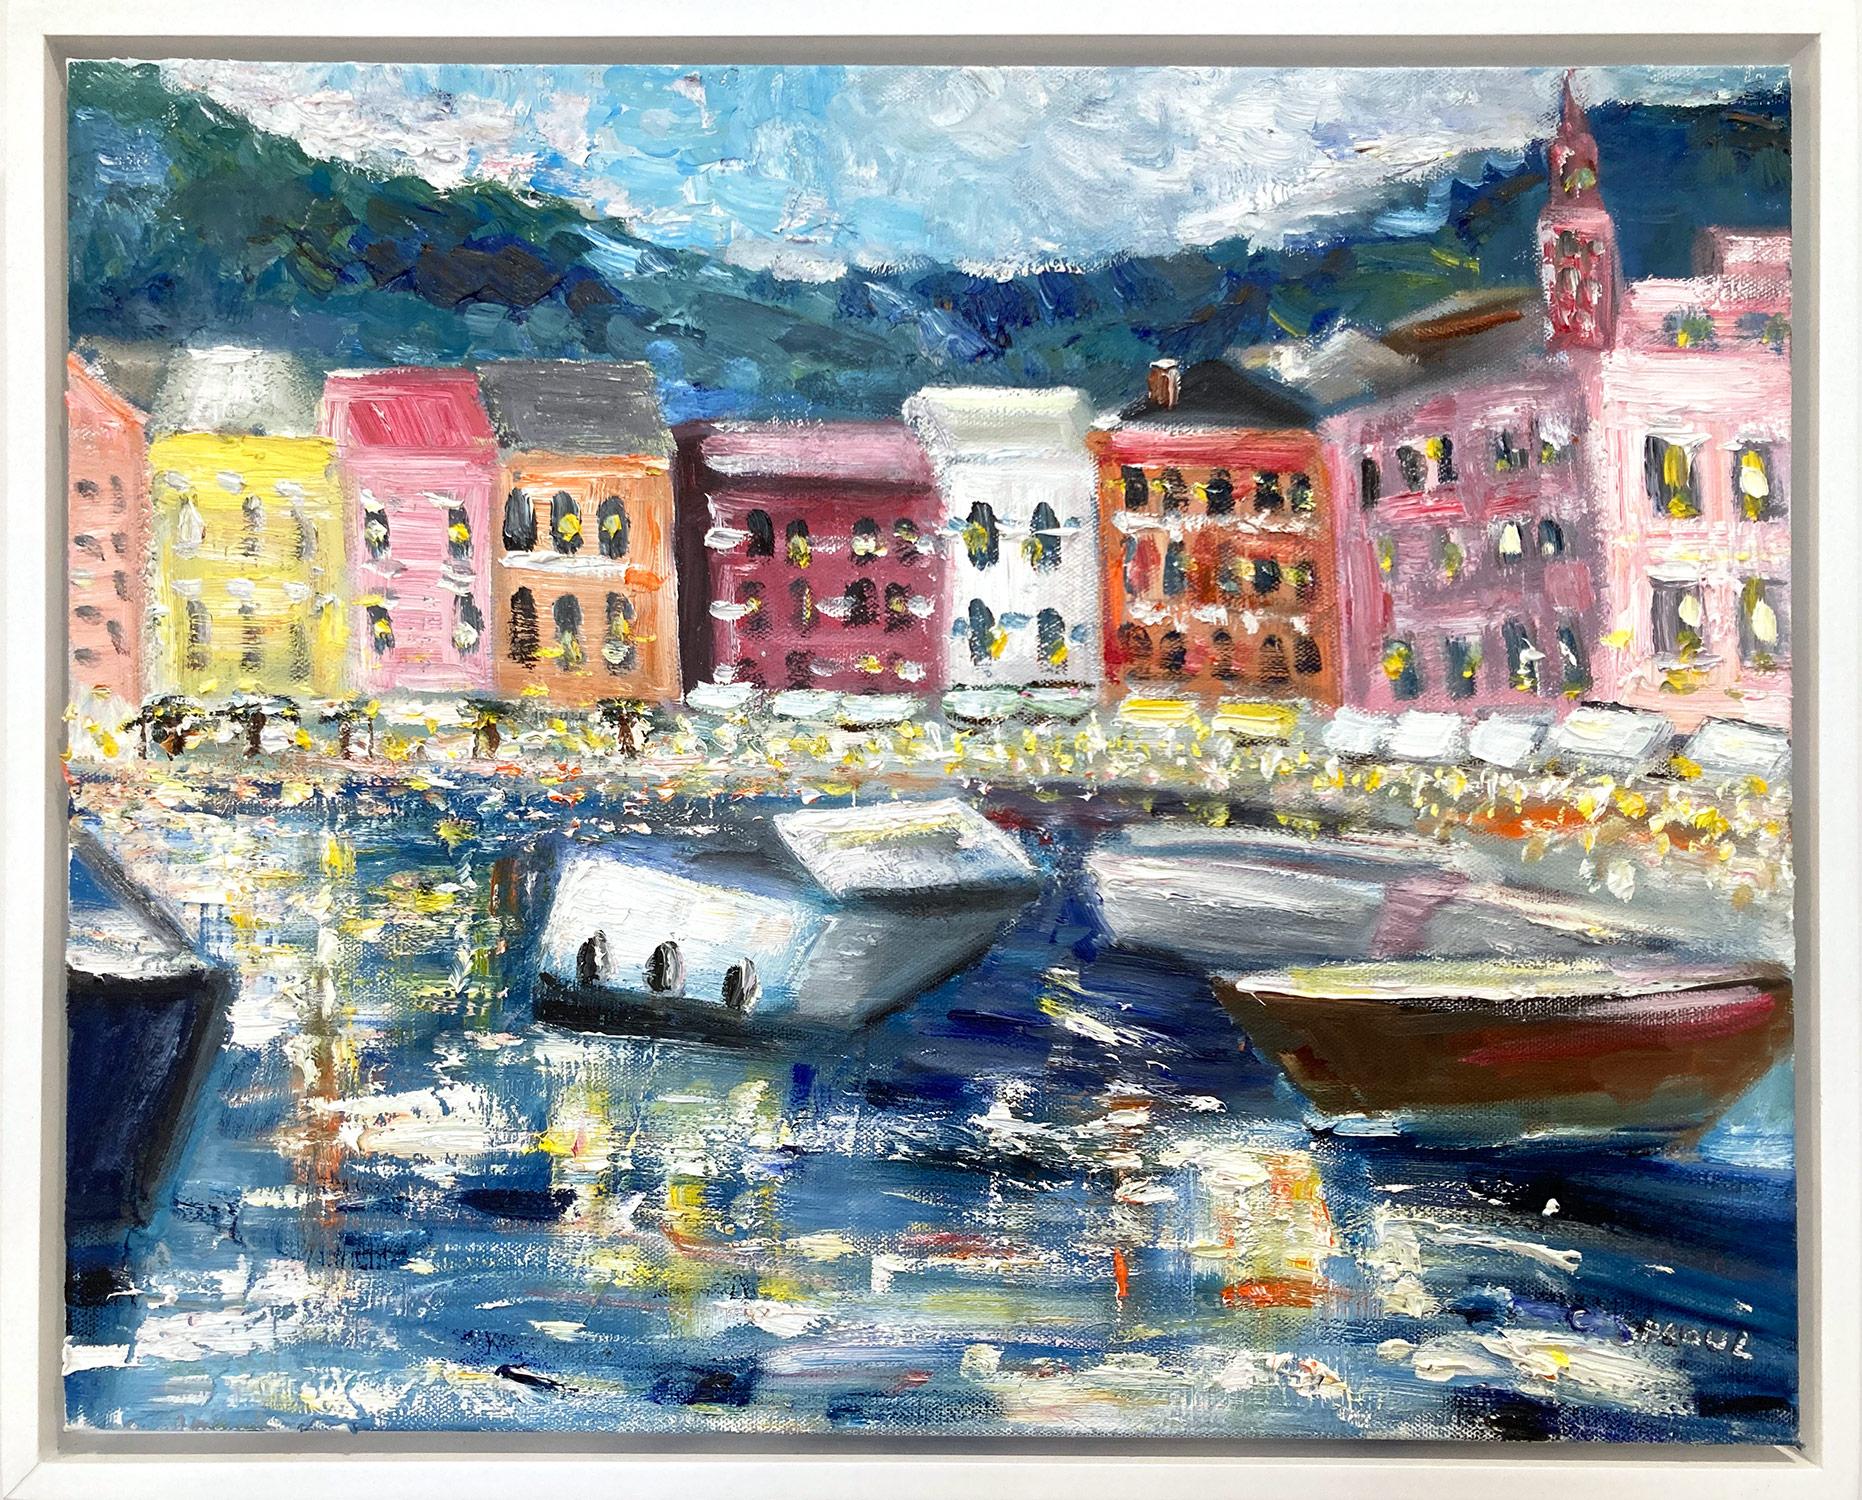 Portofino Oil Painting - 49 For Sale on 1stDibs